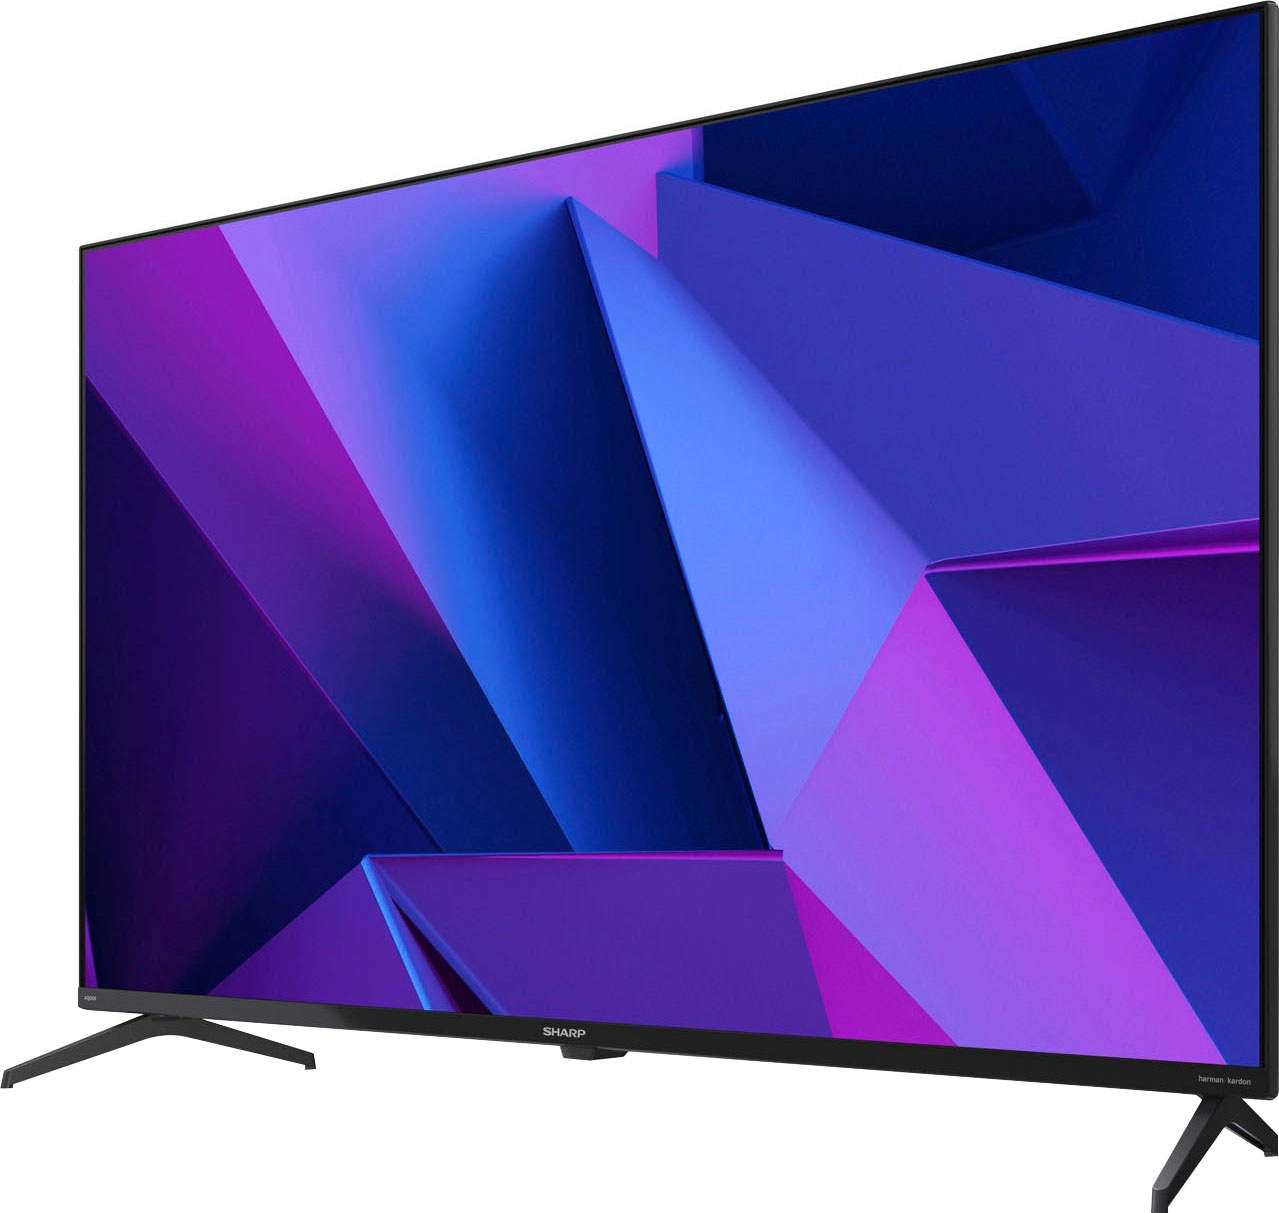 Smart-TV jetzt Android cm/43 Shop im TV- »4T-C43FNx«, HD, Zoll, Online 108 OTTO Sharp Ultra LED-Fernseher 4K